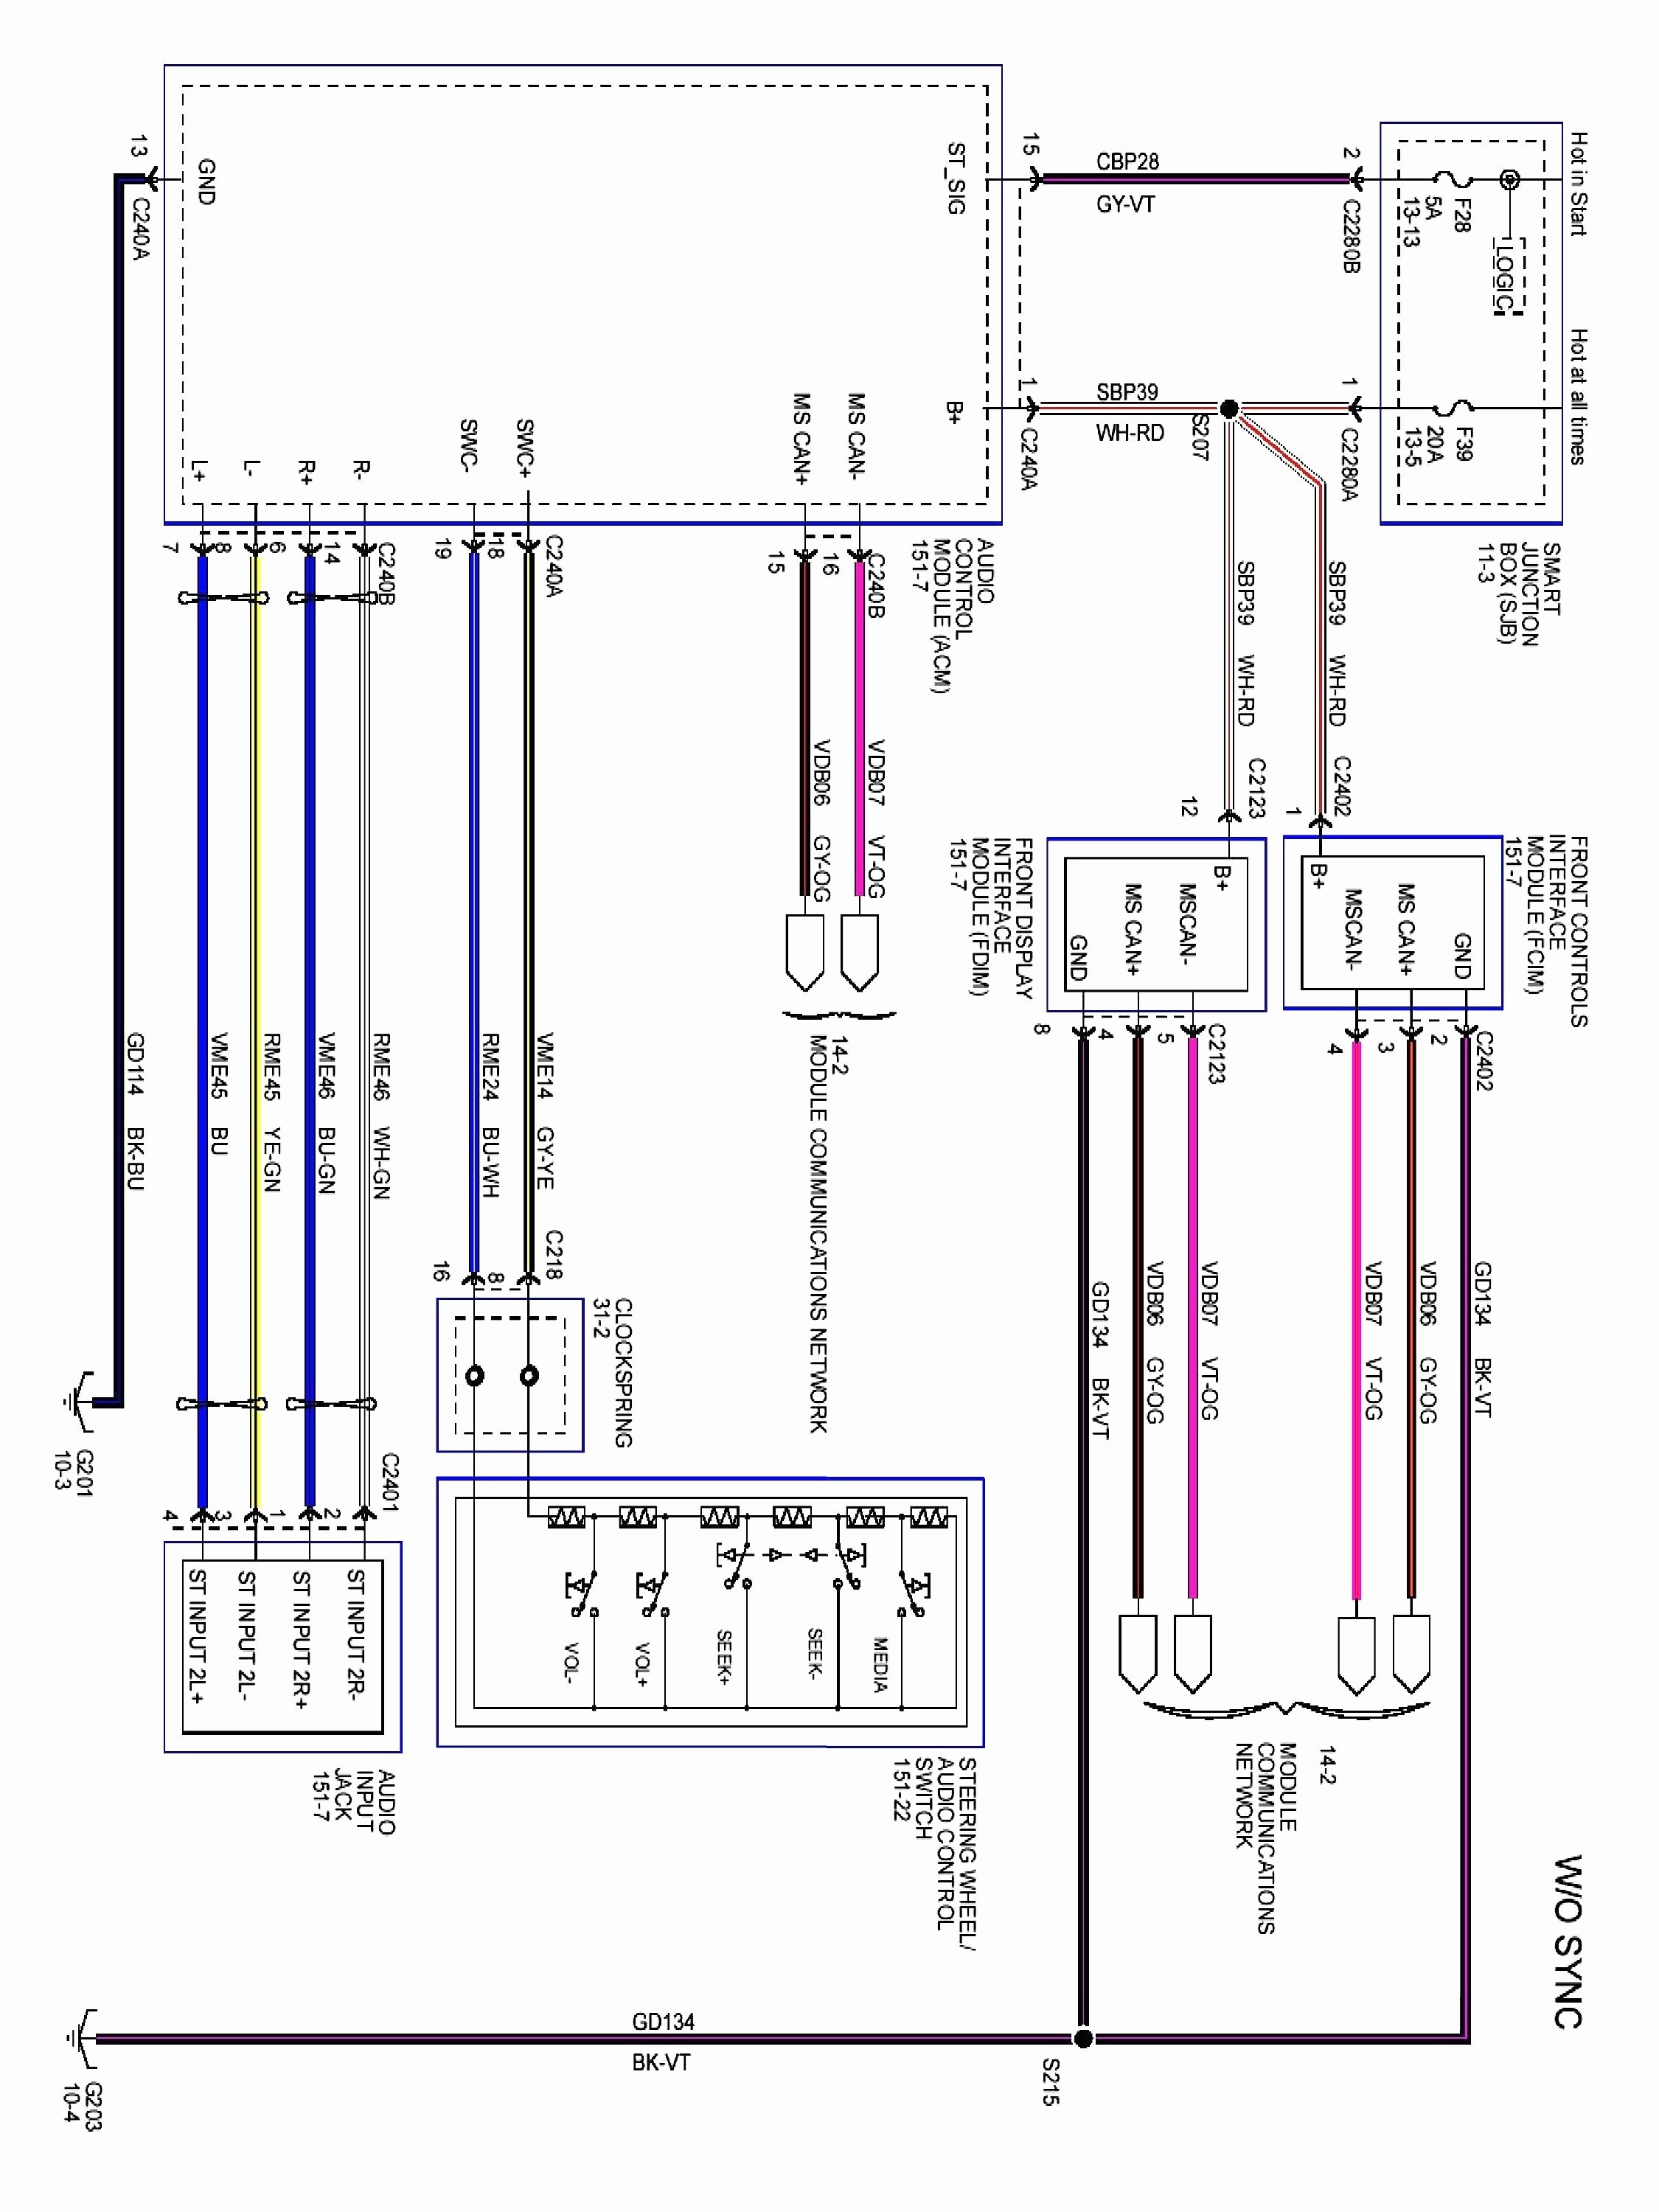 Car Inspection Diagram Wiring Diagram for Amplifier Car Stereo Best Amplifier Wiring Of Car Inspection Diagram